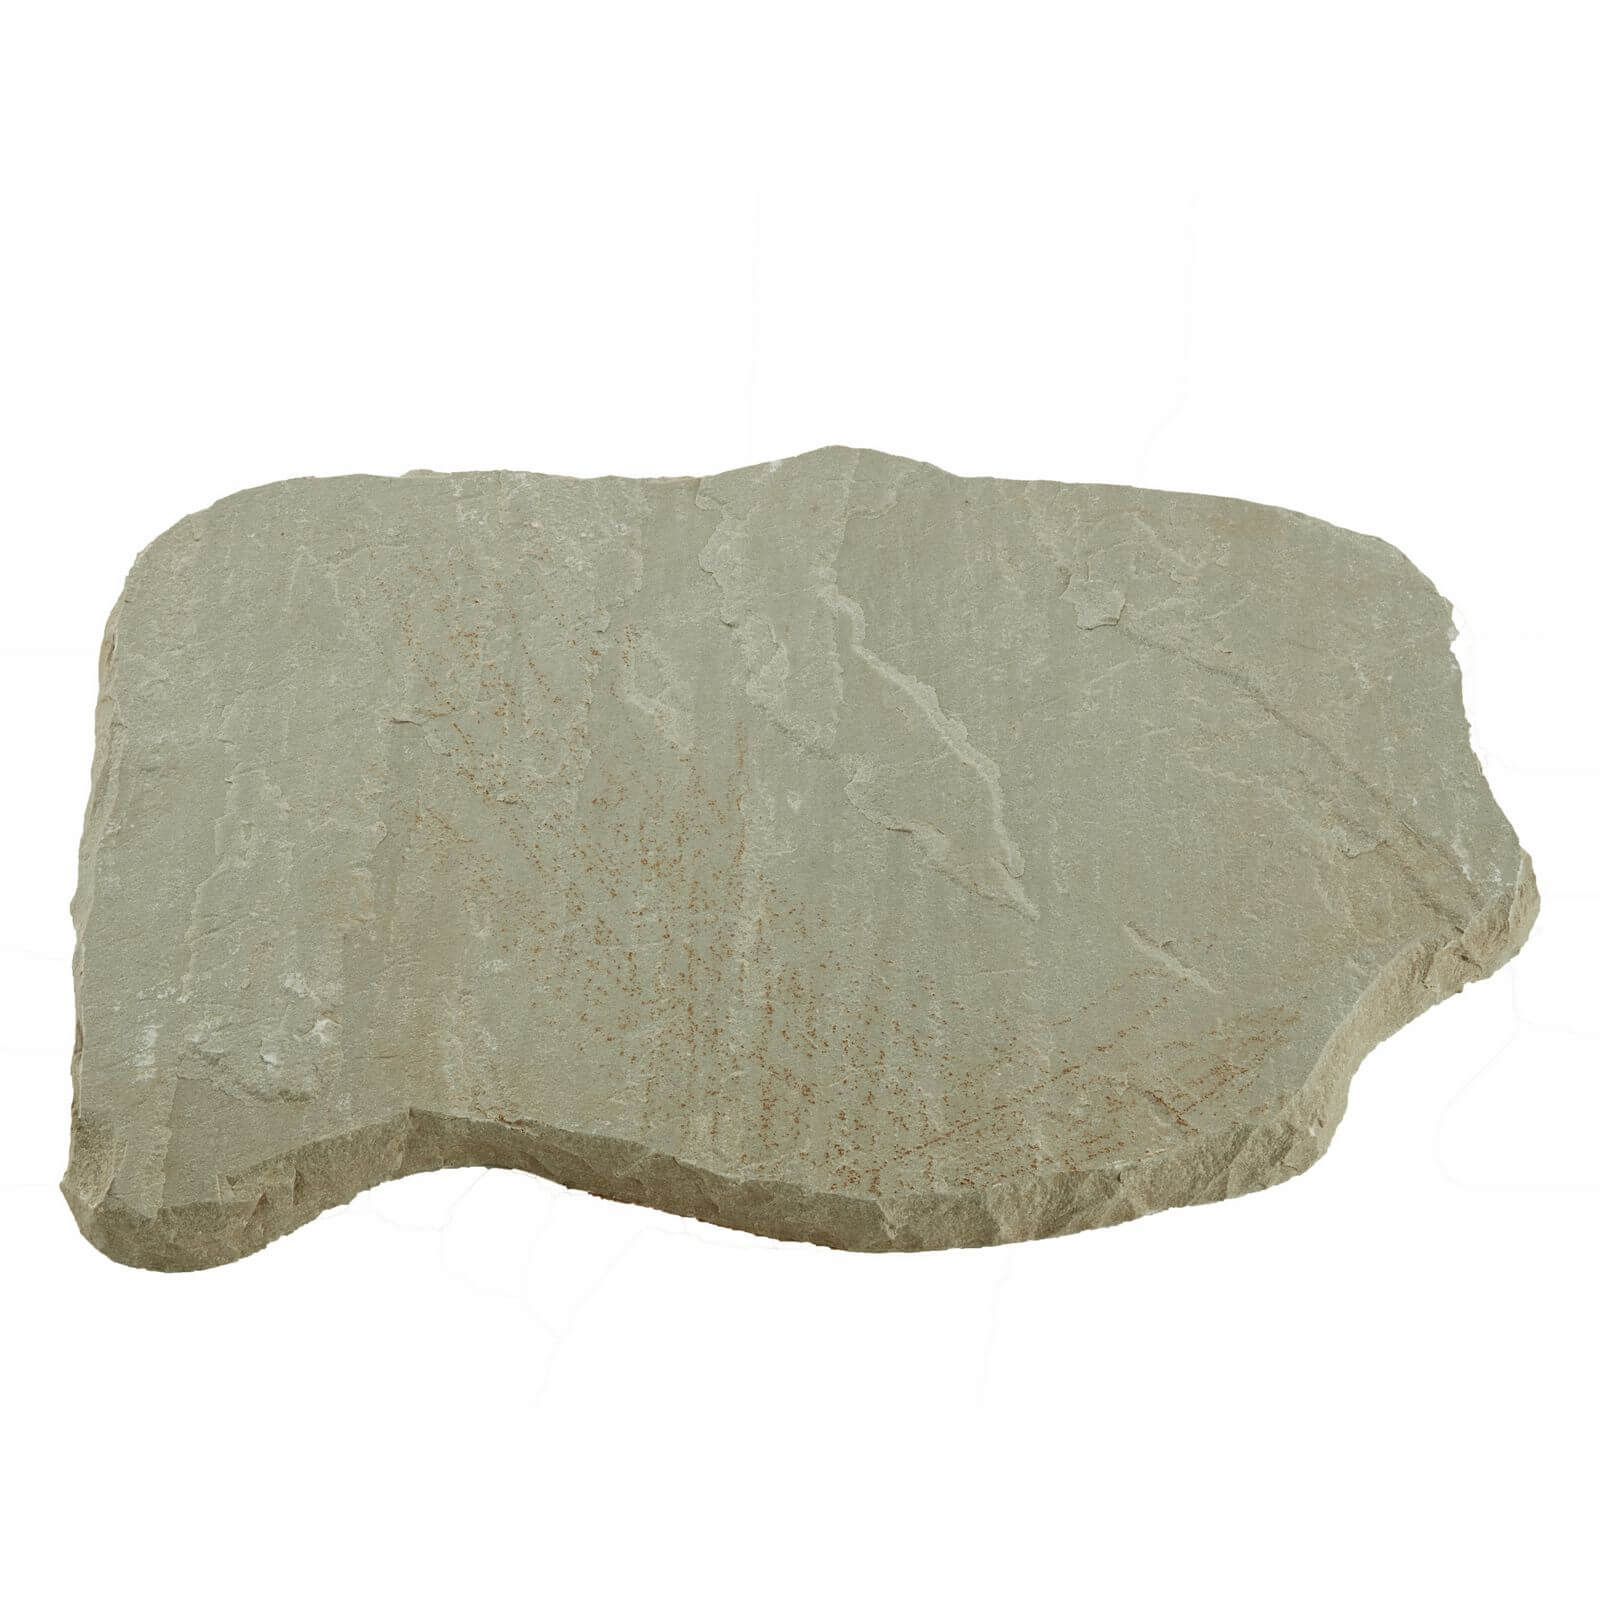 Stylish Stone Natural Random Stepping Stone 400 x 300mm Lakefell - 1 Piece